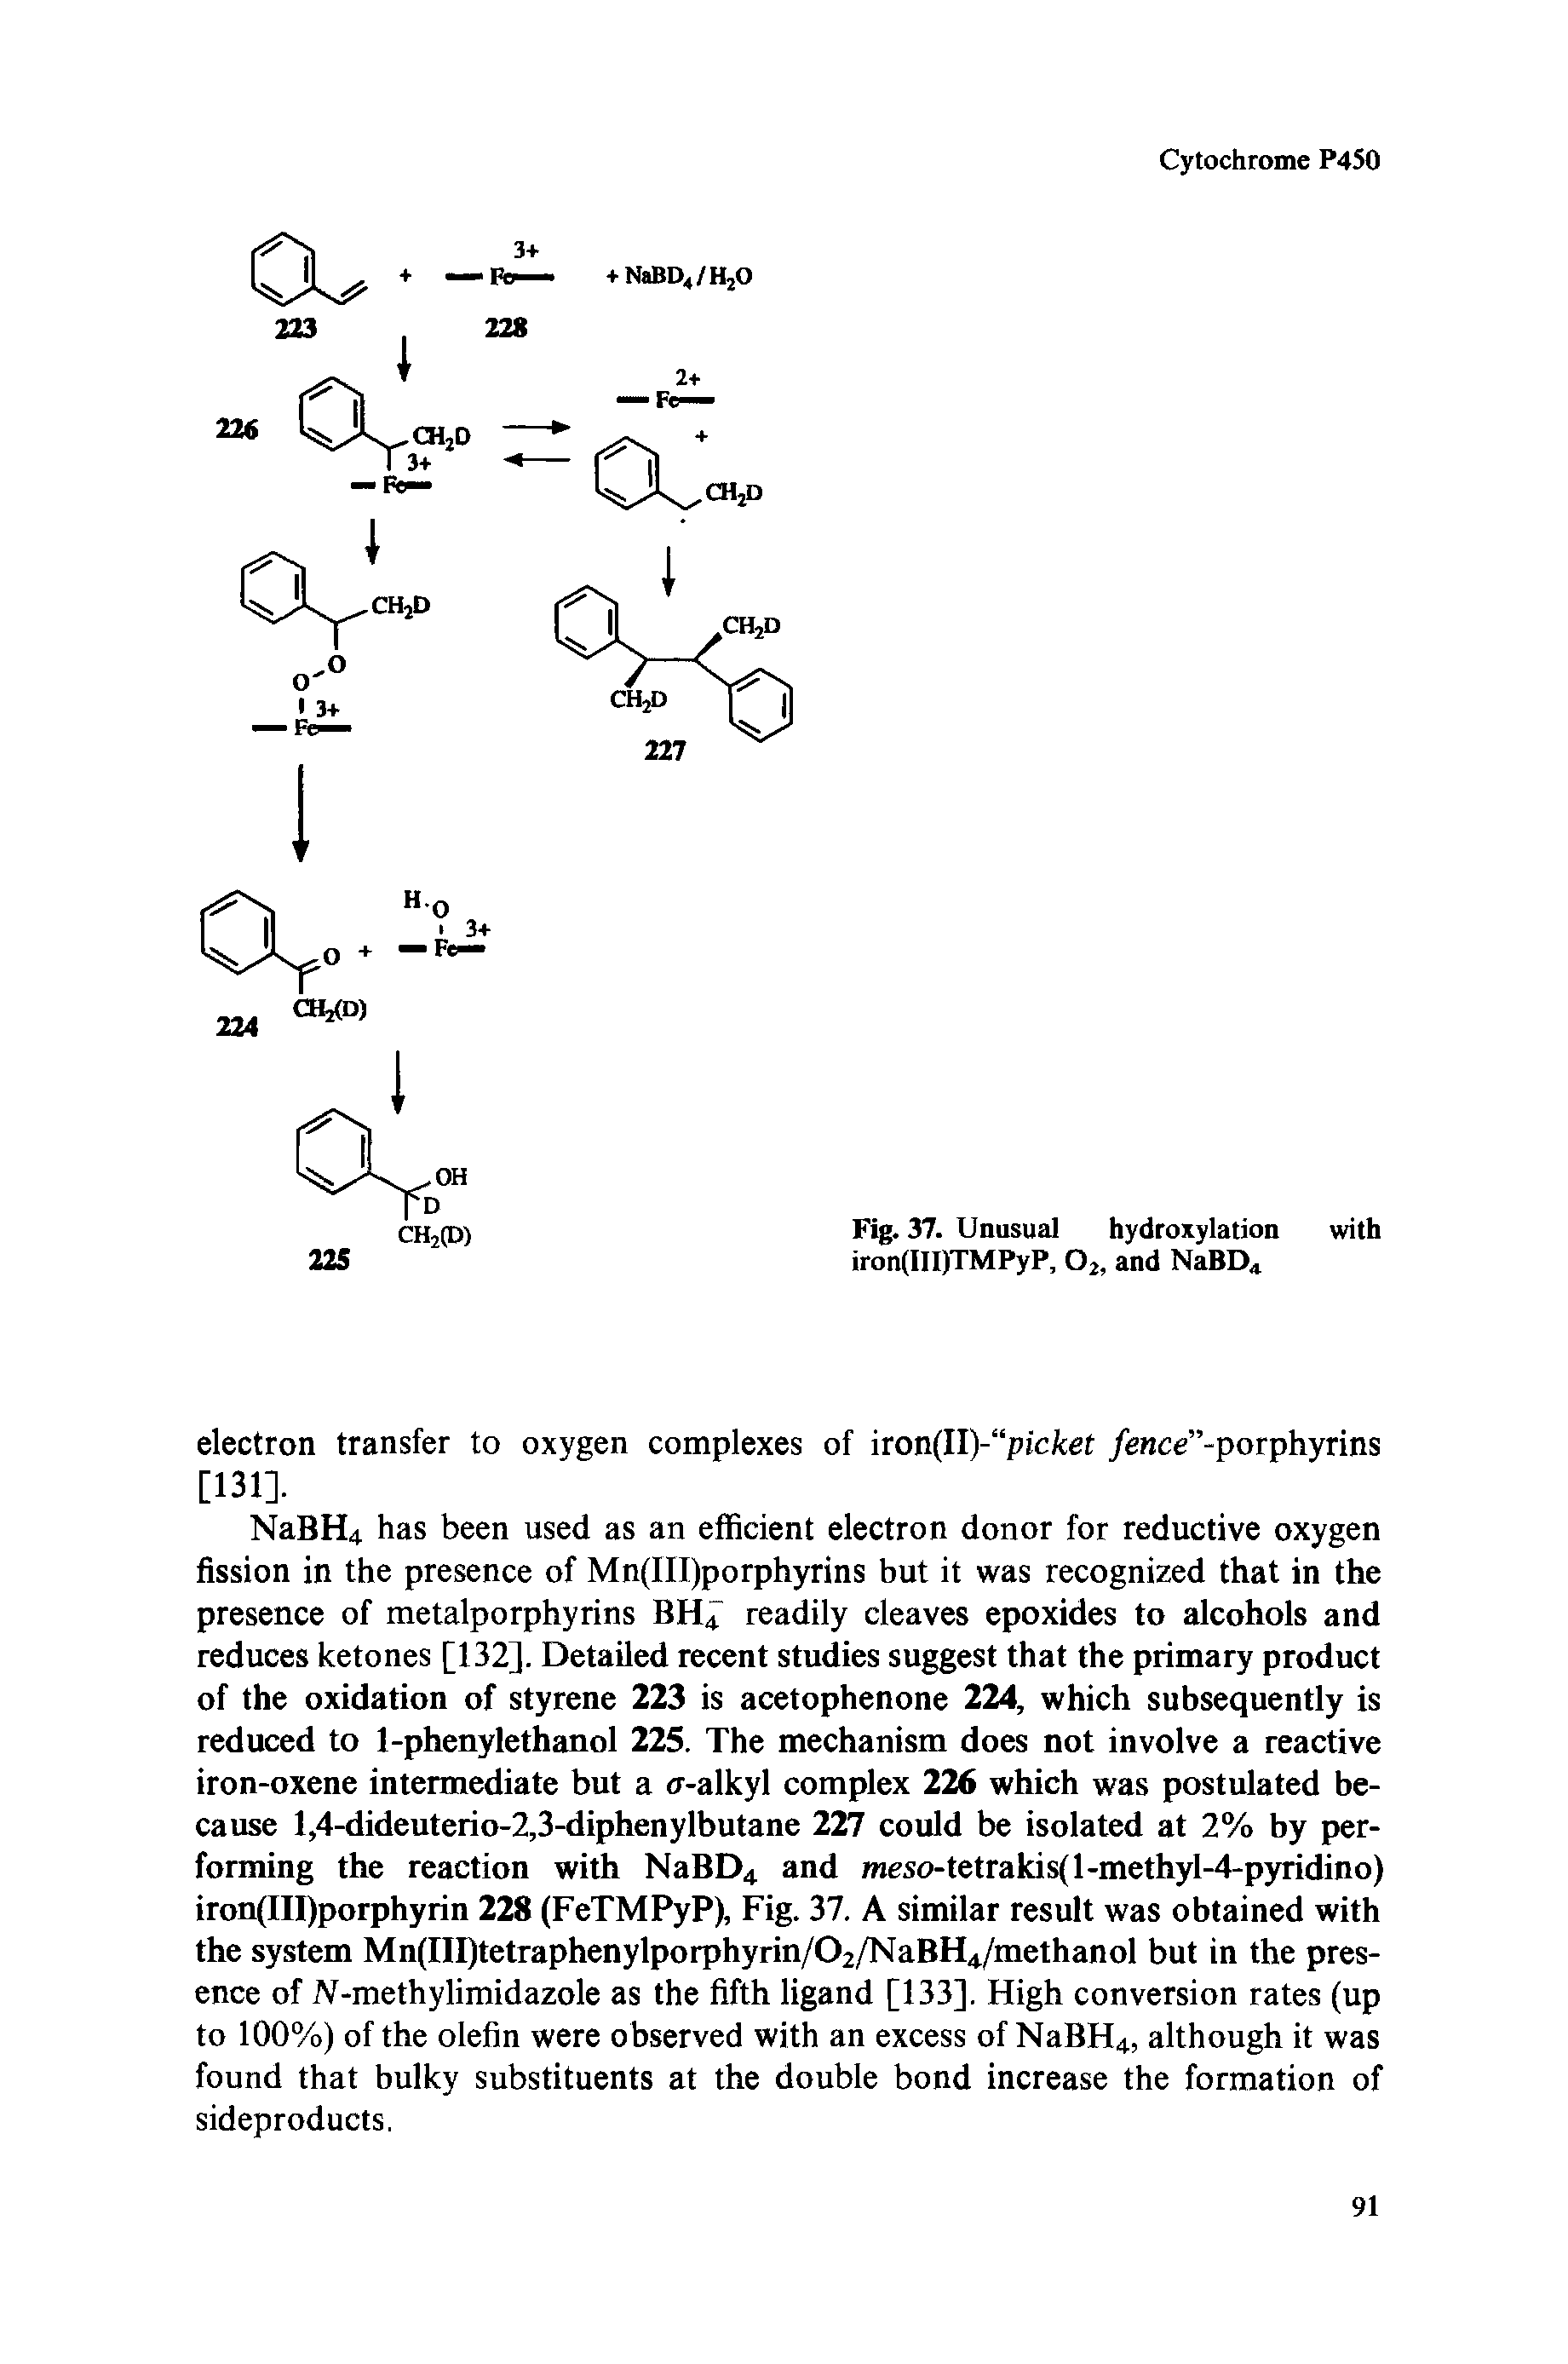 Fig. 37. Unusual hydroxylation with iron(III)TMPyP, 02, and NaBD ...